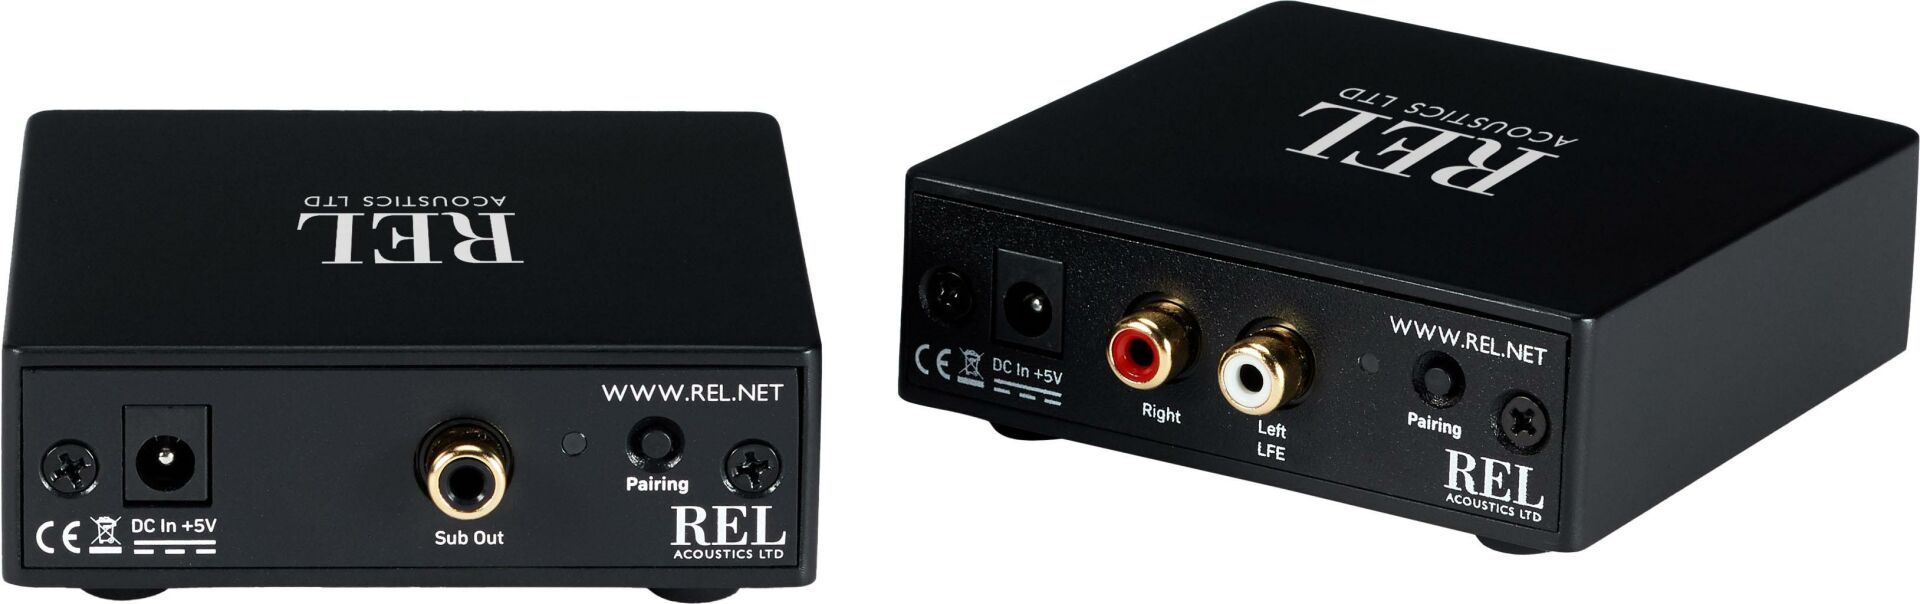 Rel Acoustics HT-AİR Wireless Transmitter